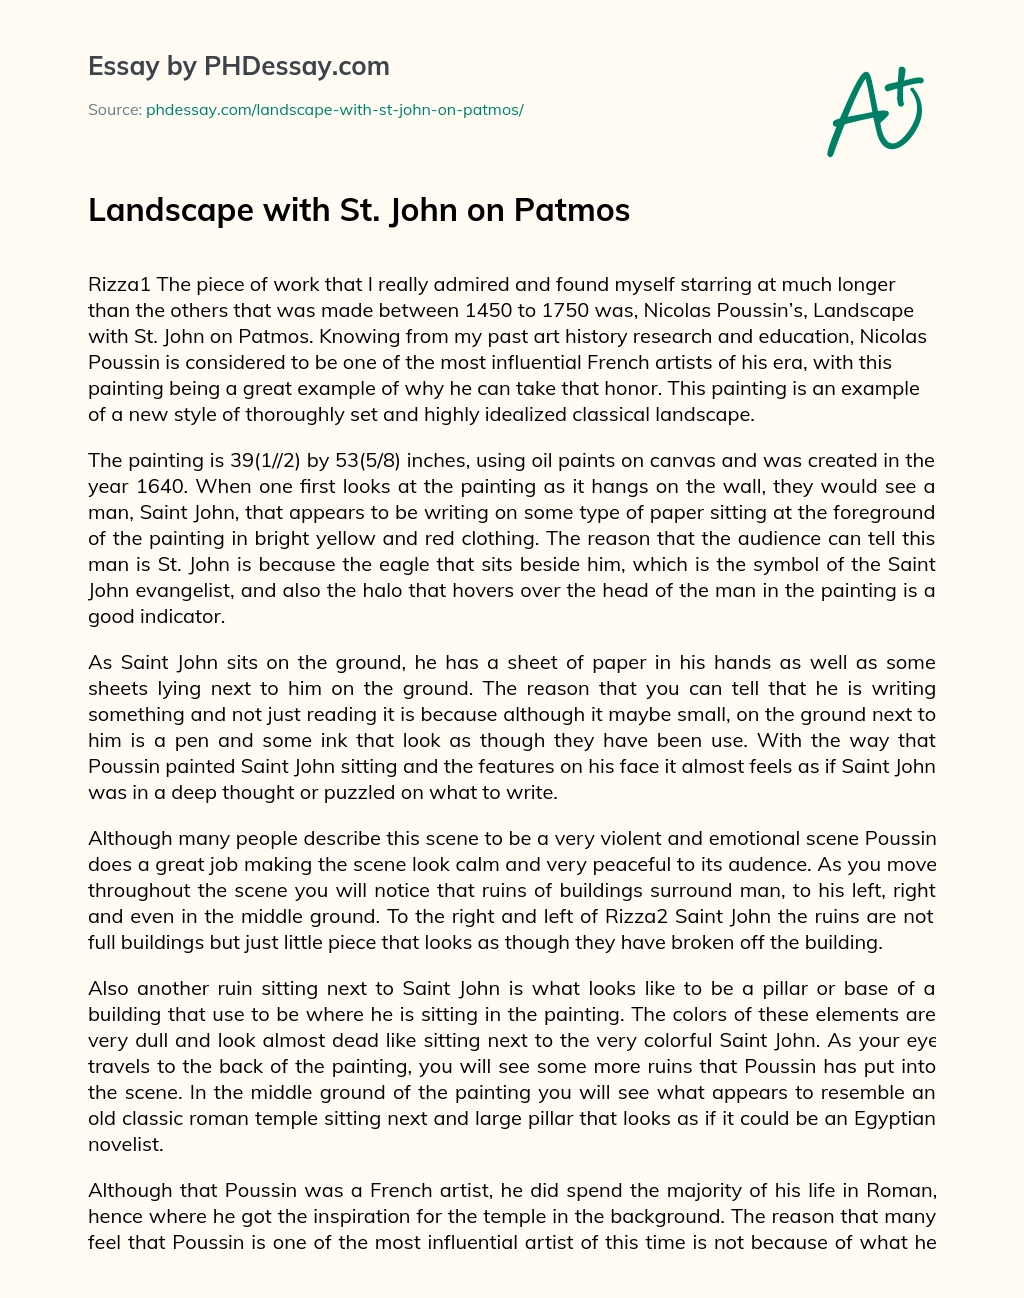 Landscape with St. John on Patmos essay